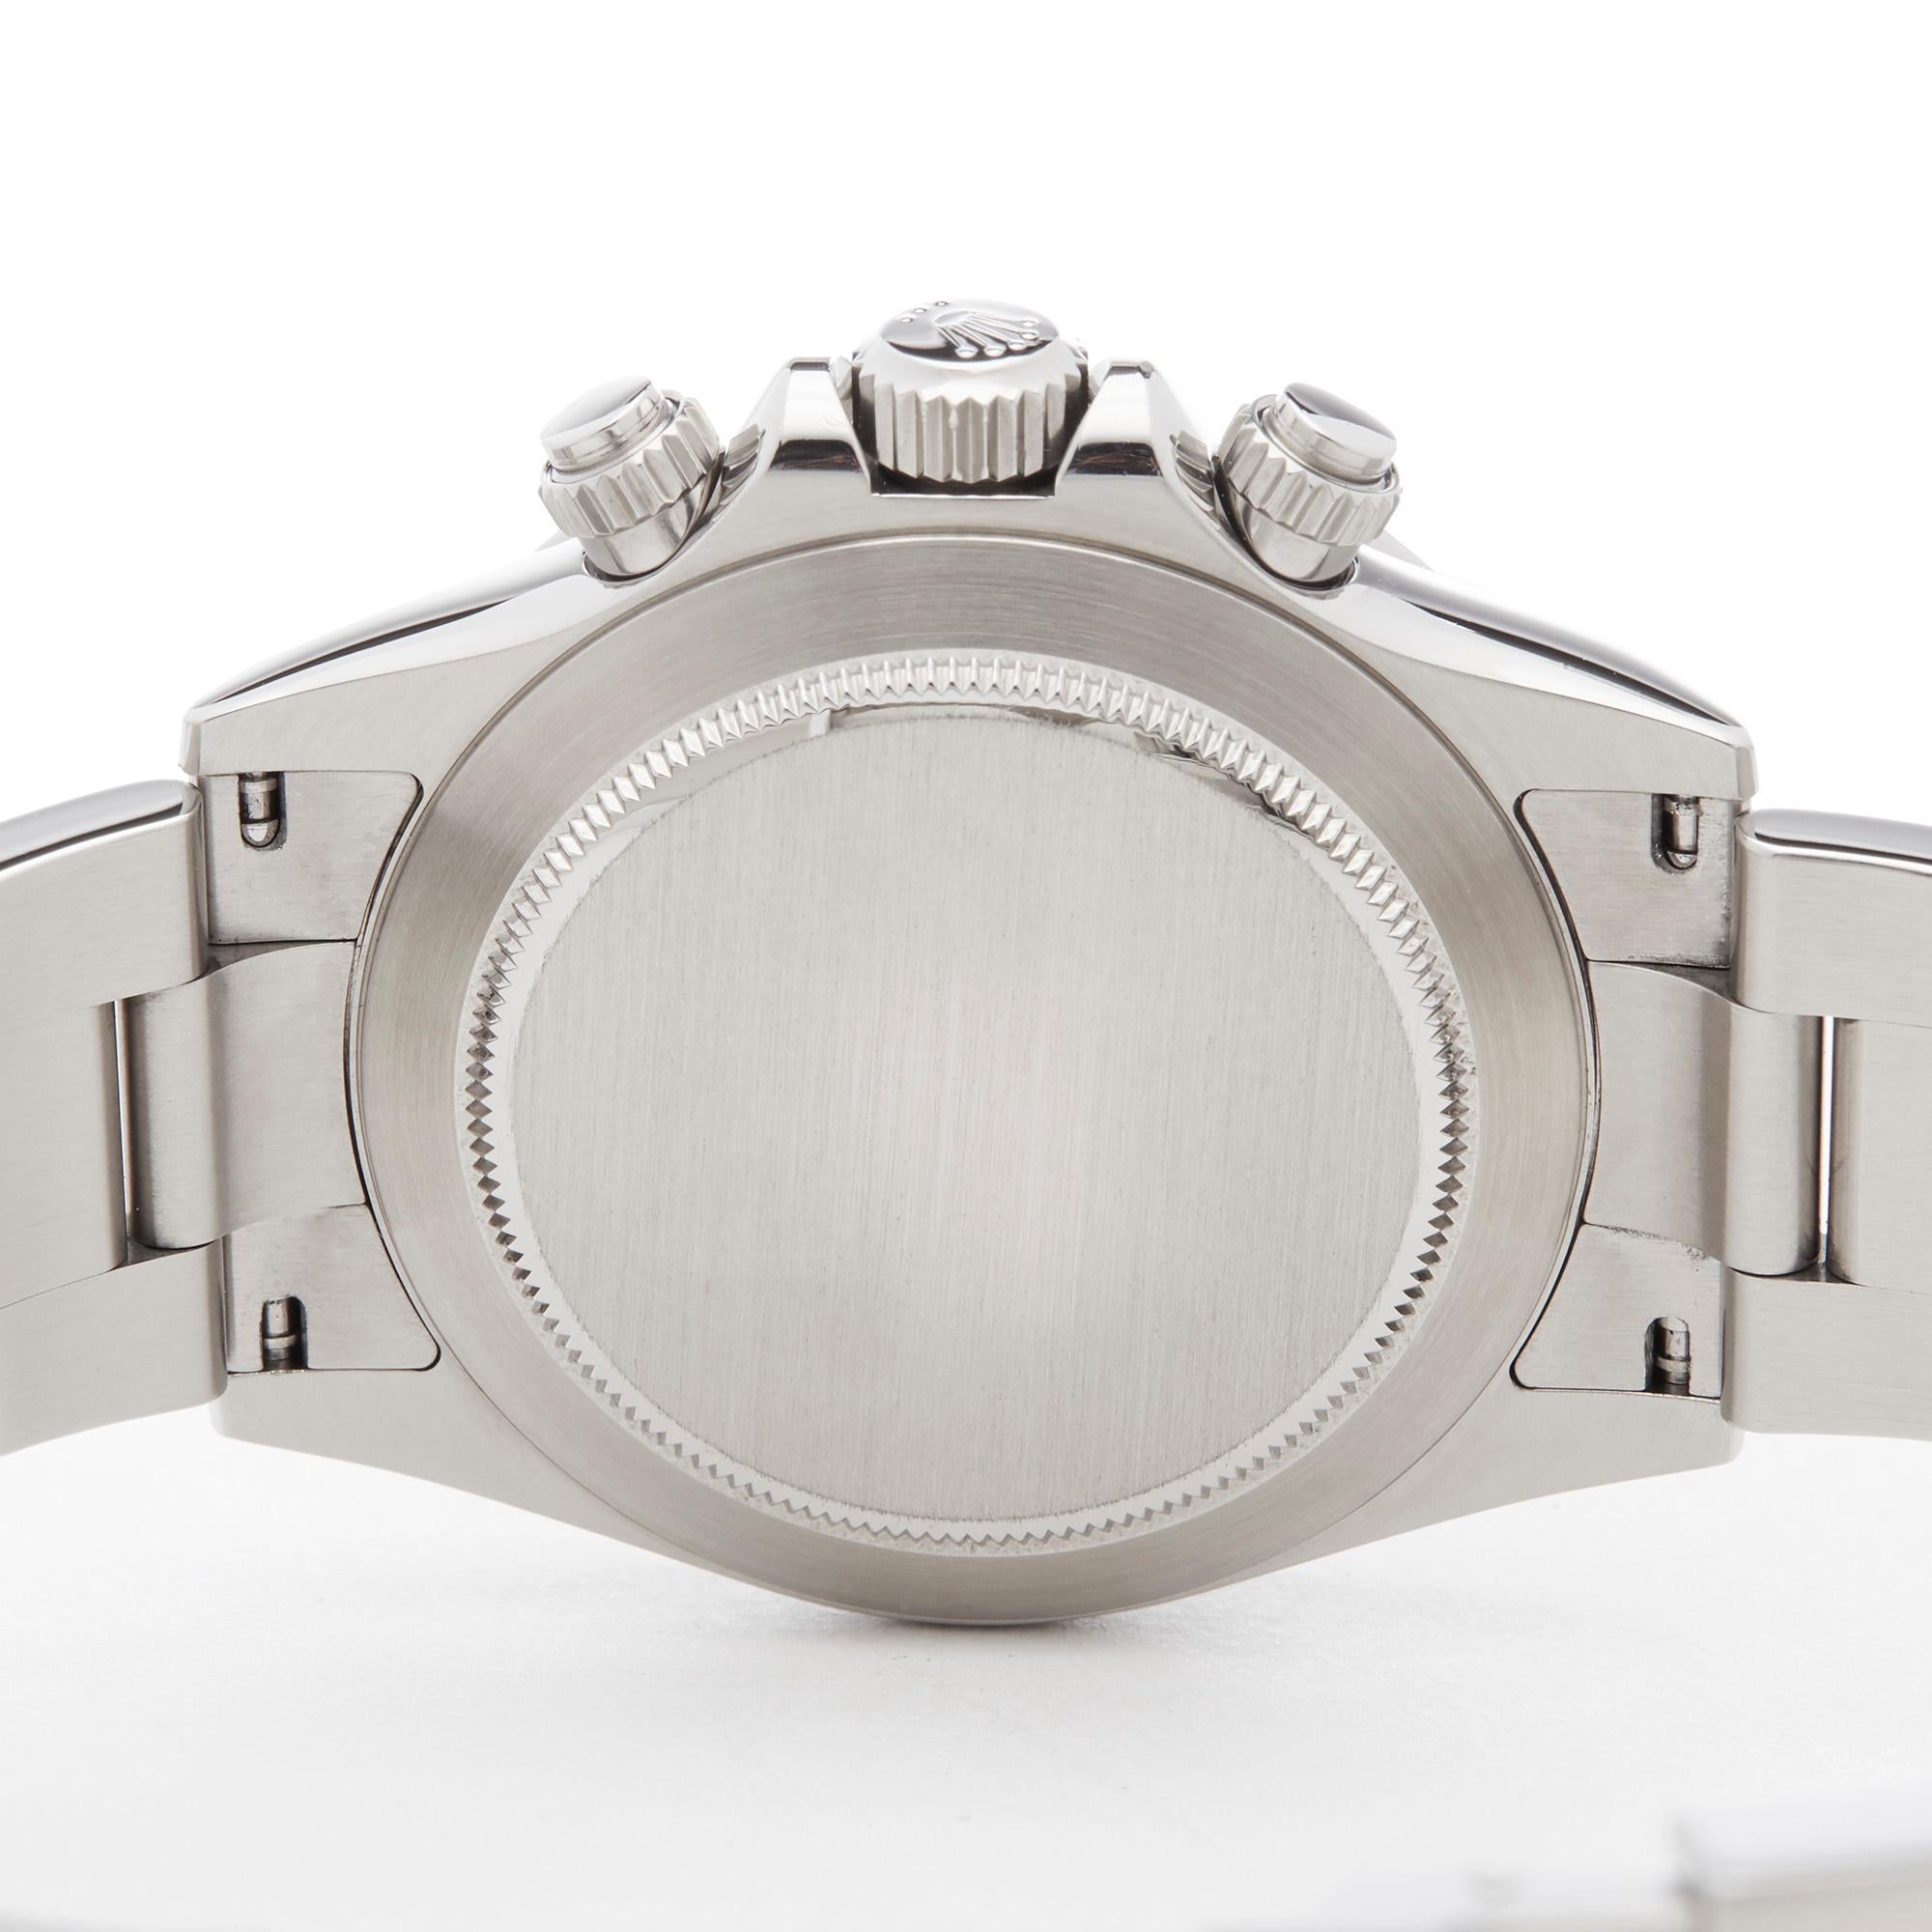 Rolex Daytona Chronograph Stainless Steel 116520 2